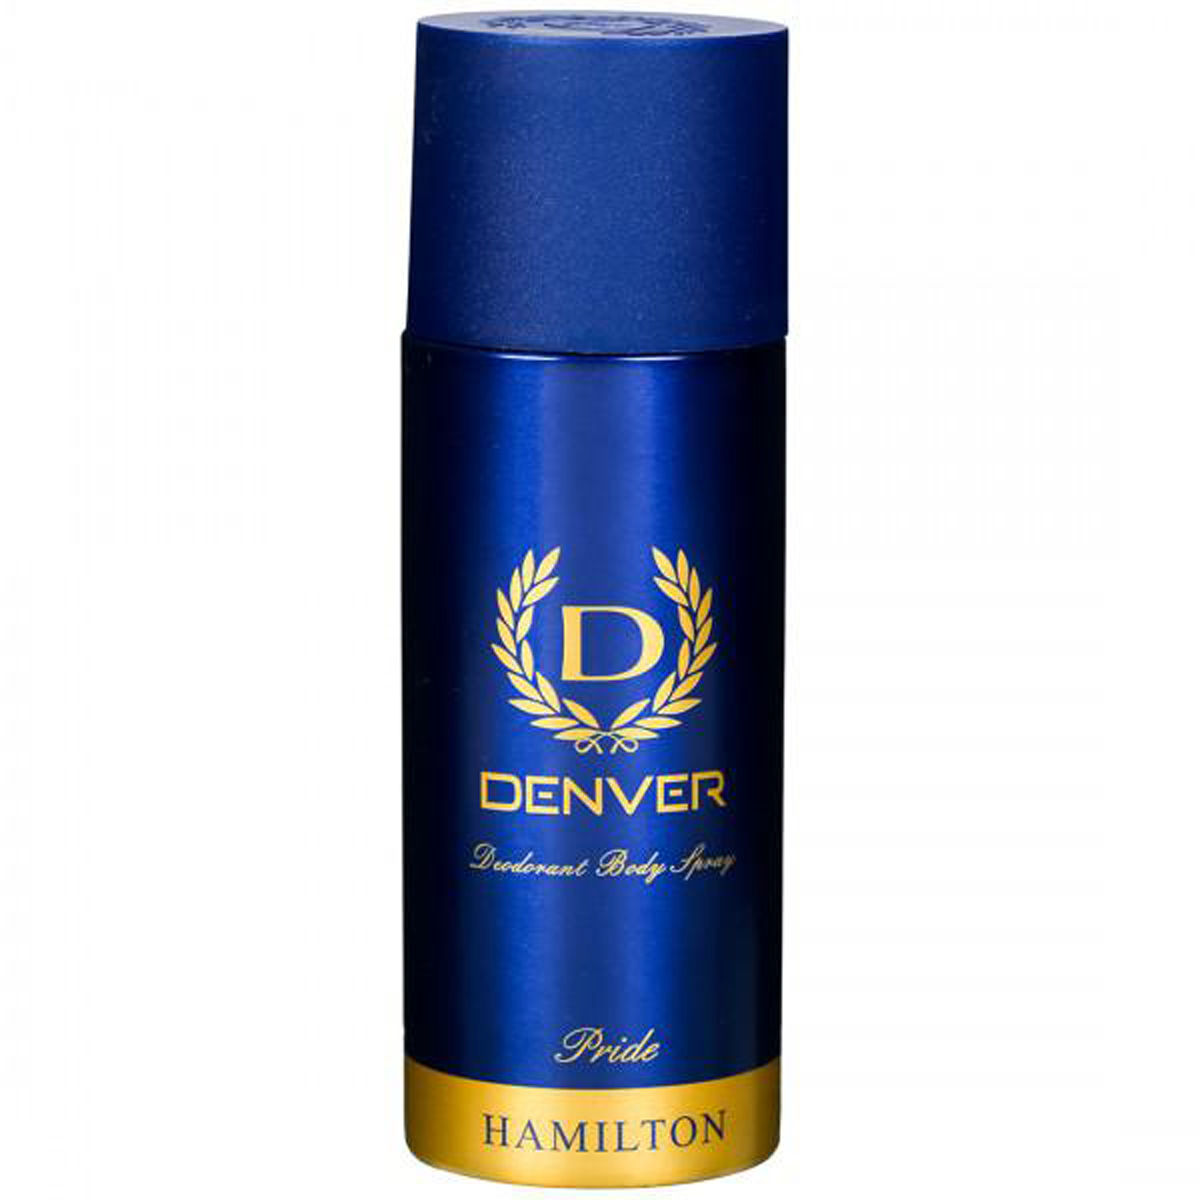 Denver Hamilton Pride Deodrant Body Spray, 165 ml, Pack of 1 